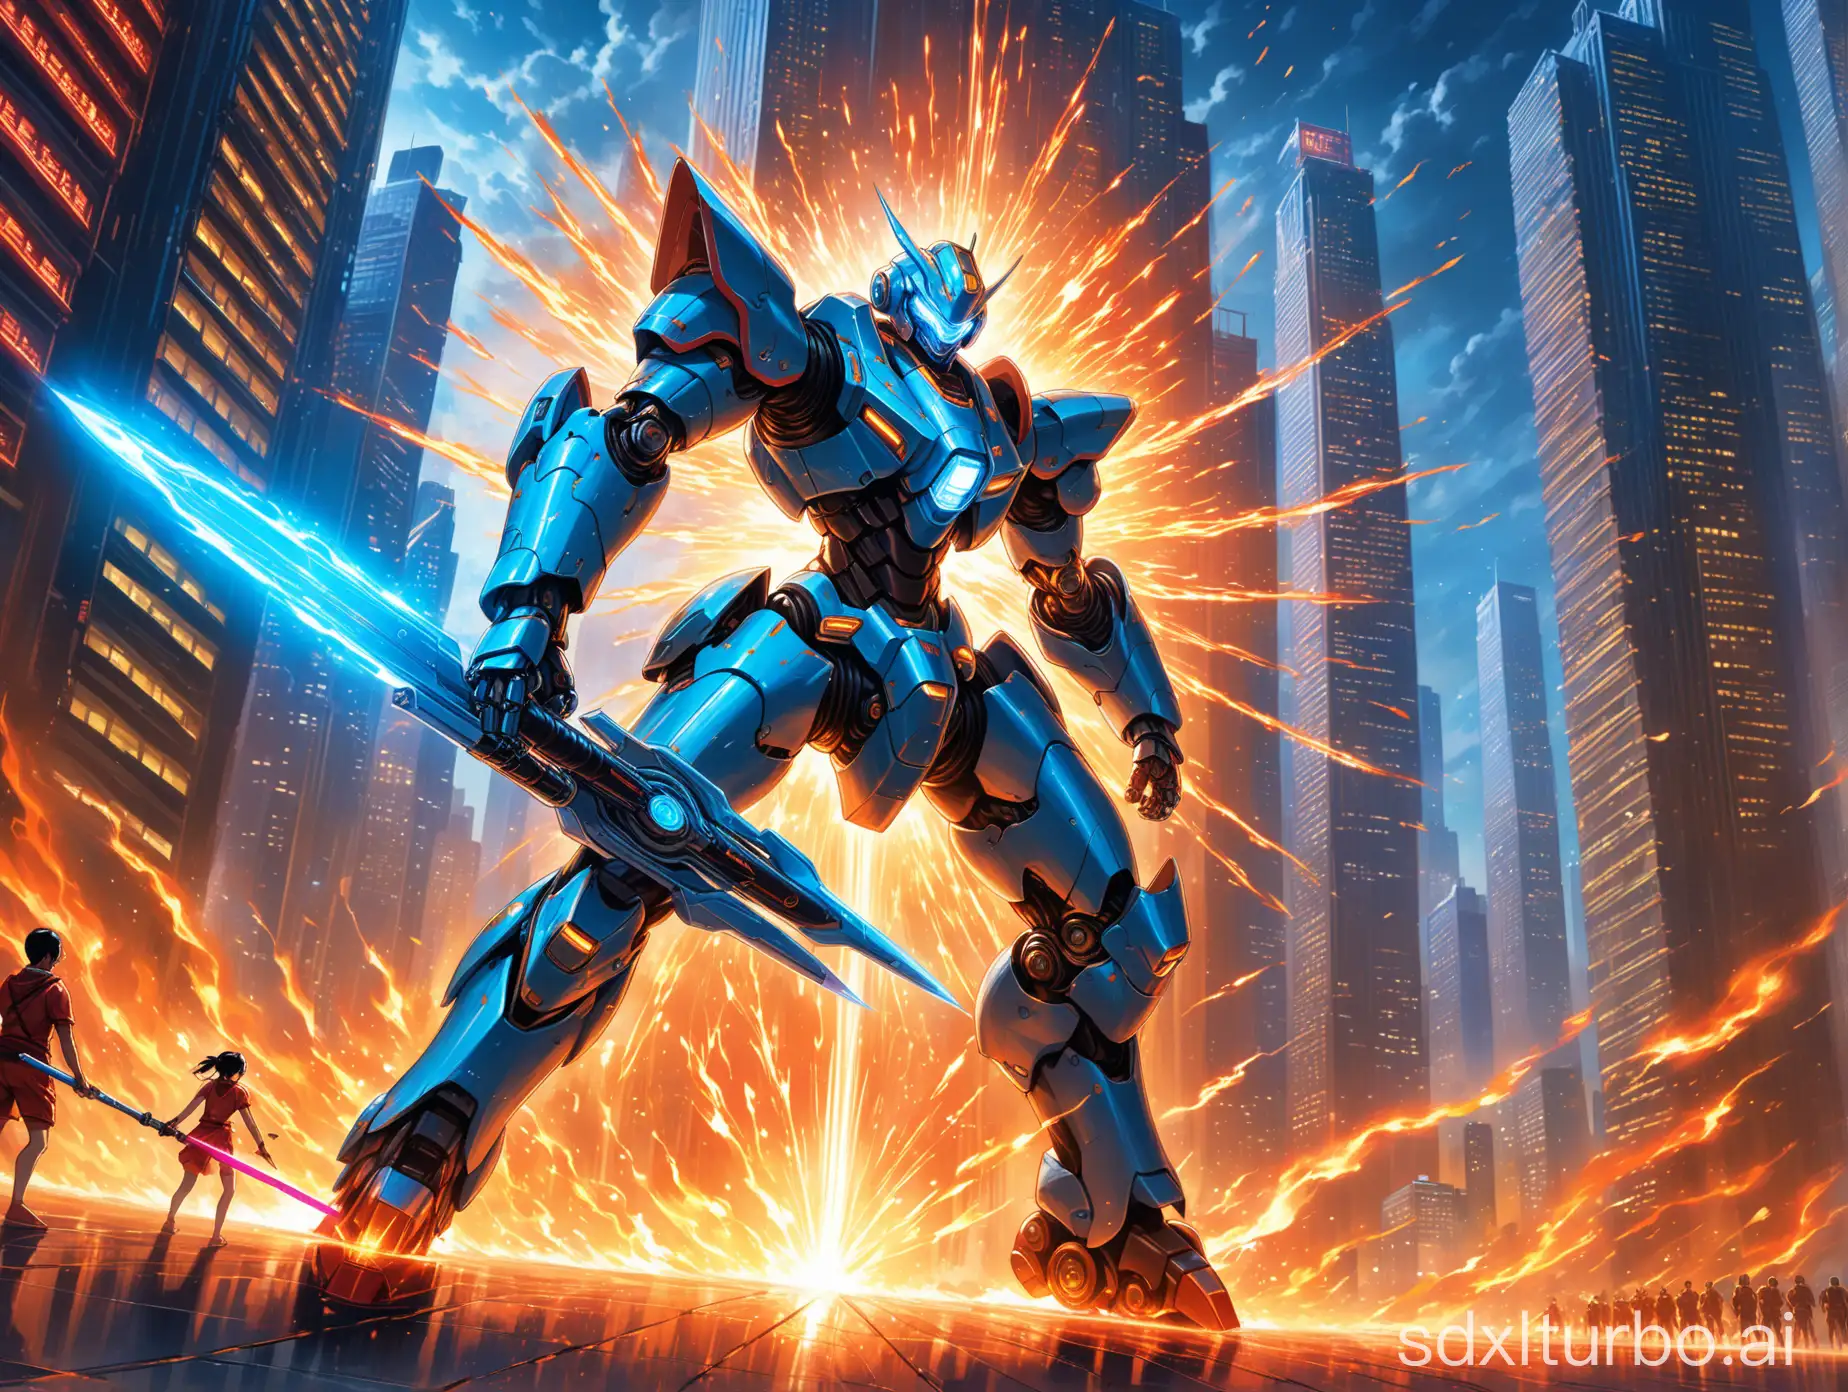 Futuristic-Robot-vs-Traditional-Warrior-Battle-in-Night-Skyline